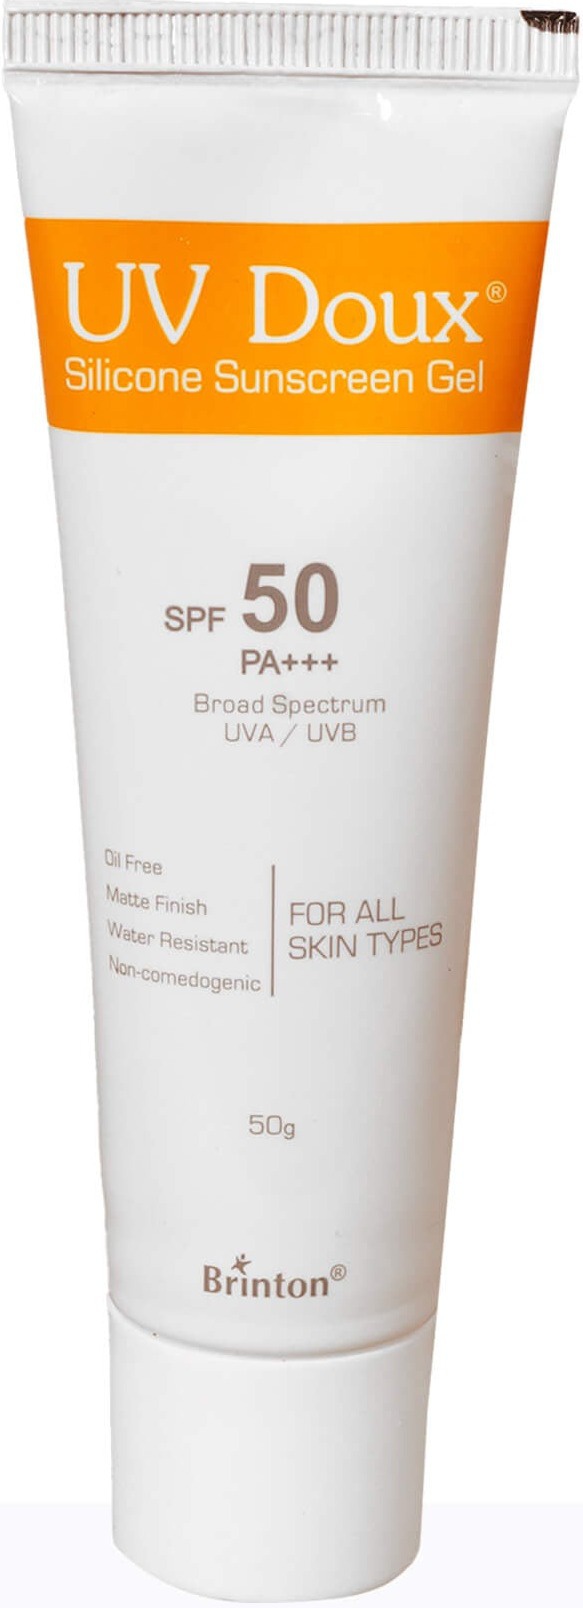 UV Doux Sunscreen SPF 50